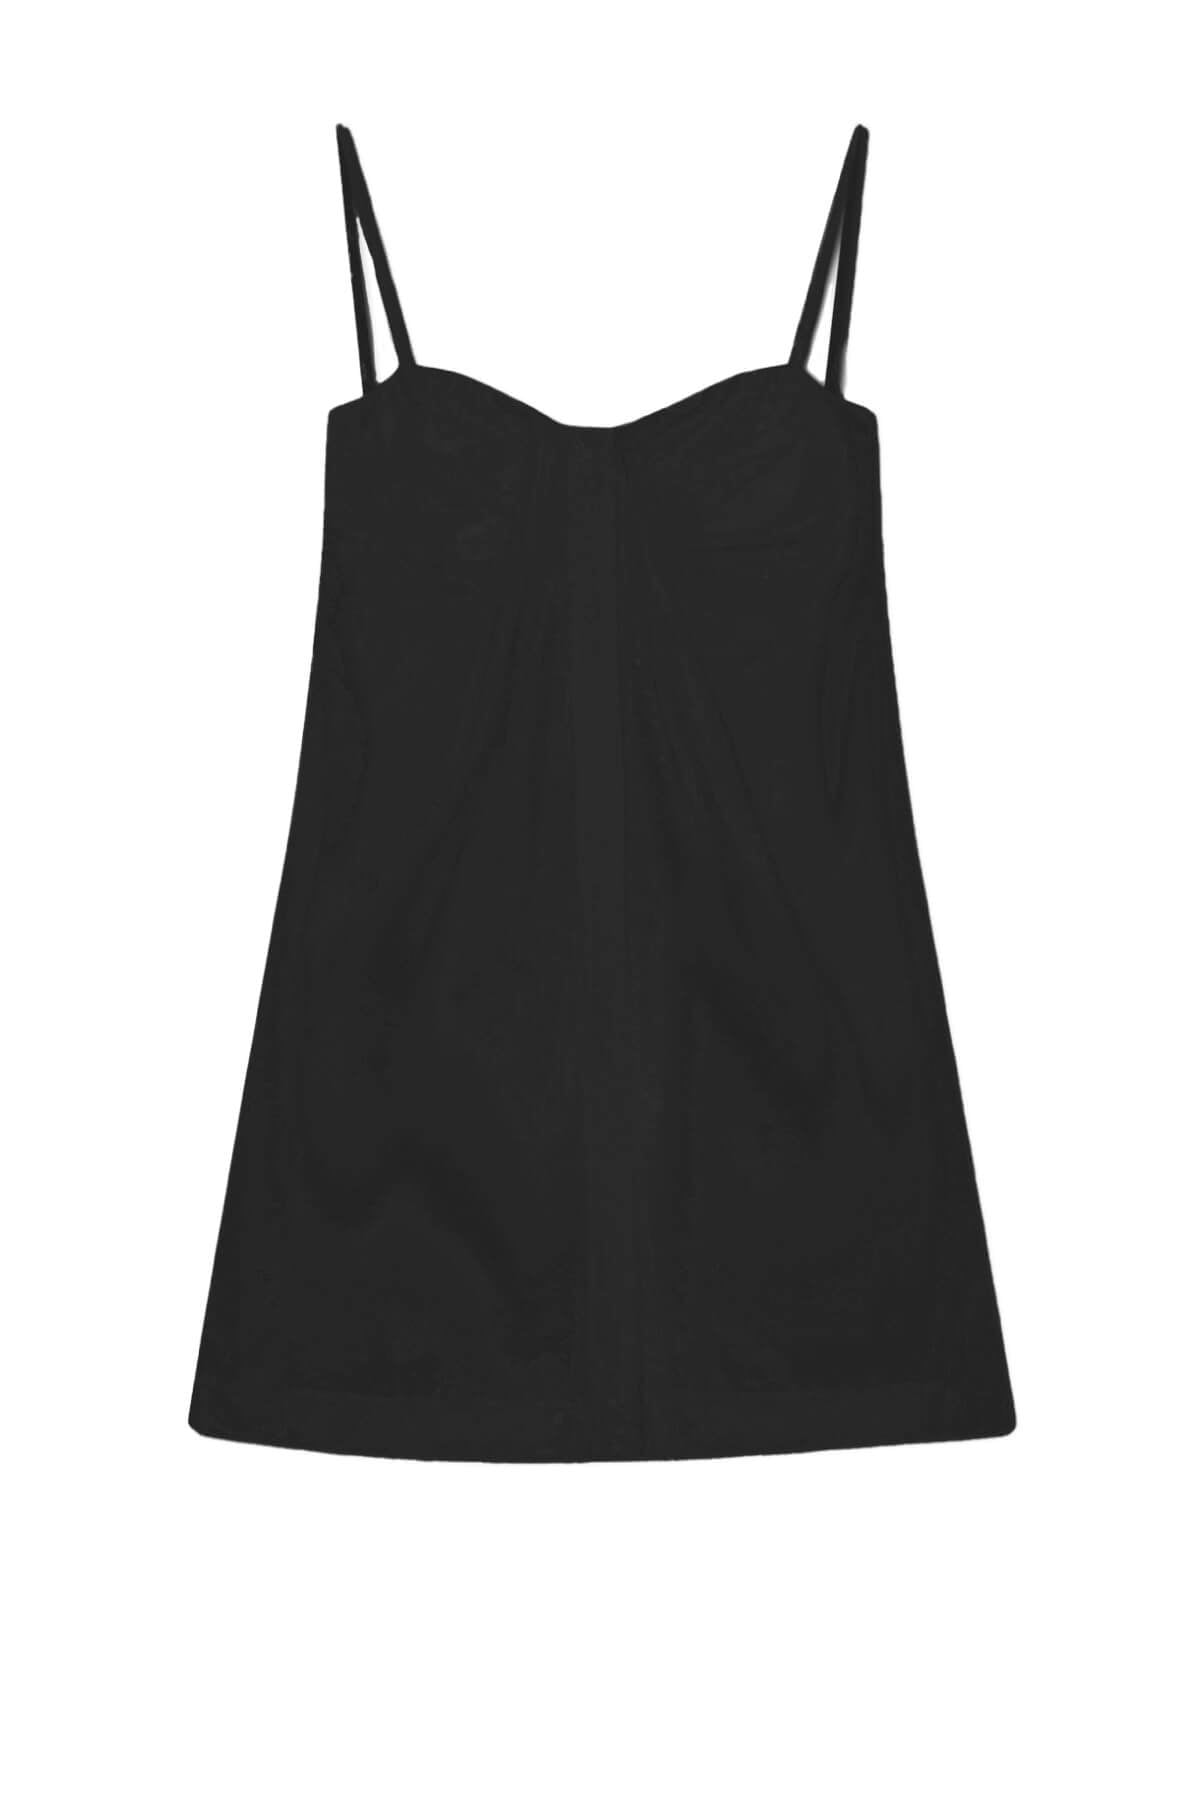 Simkhai Kendall Twisted Cami Dress - Black